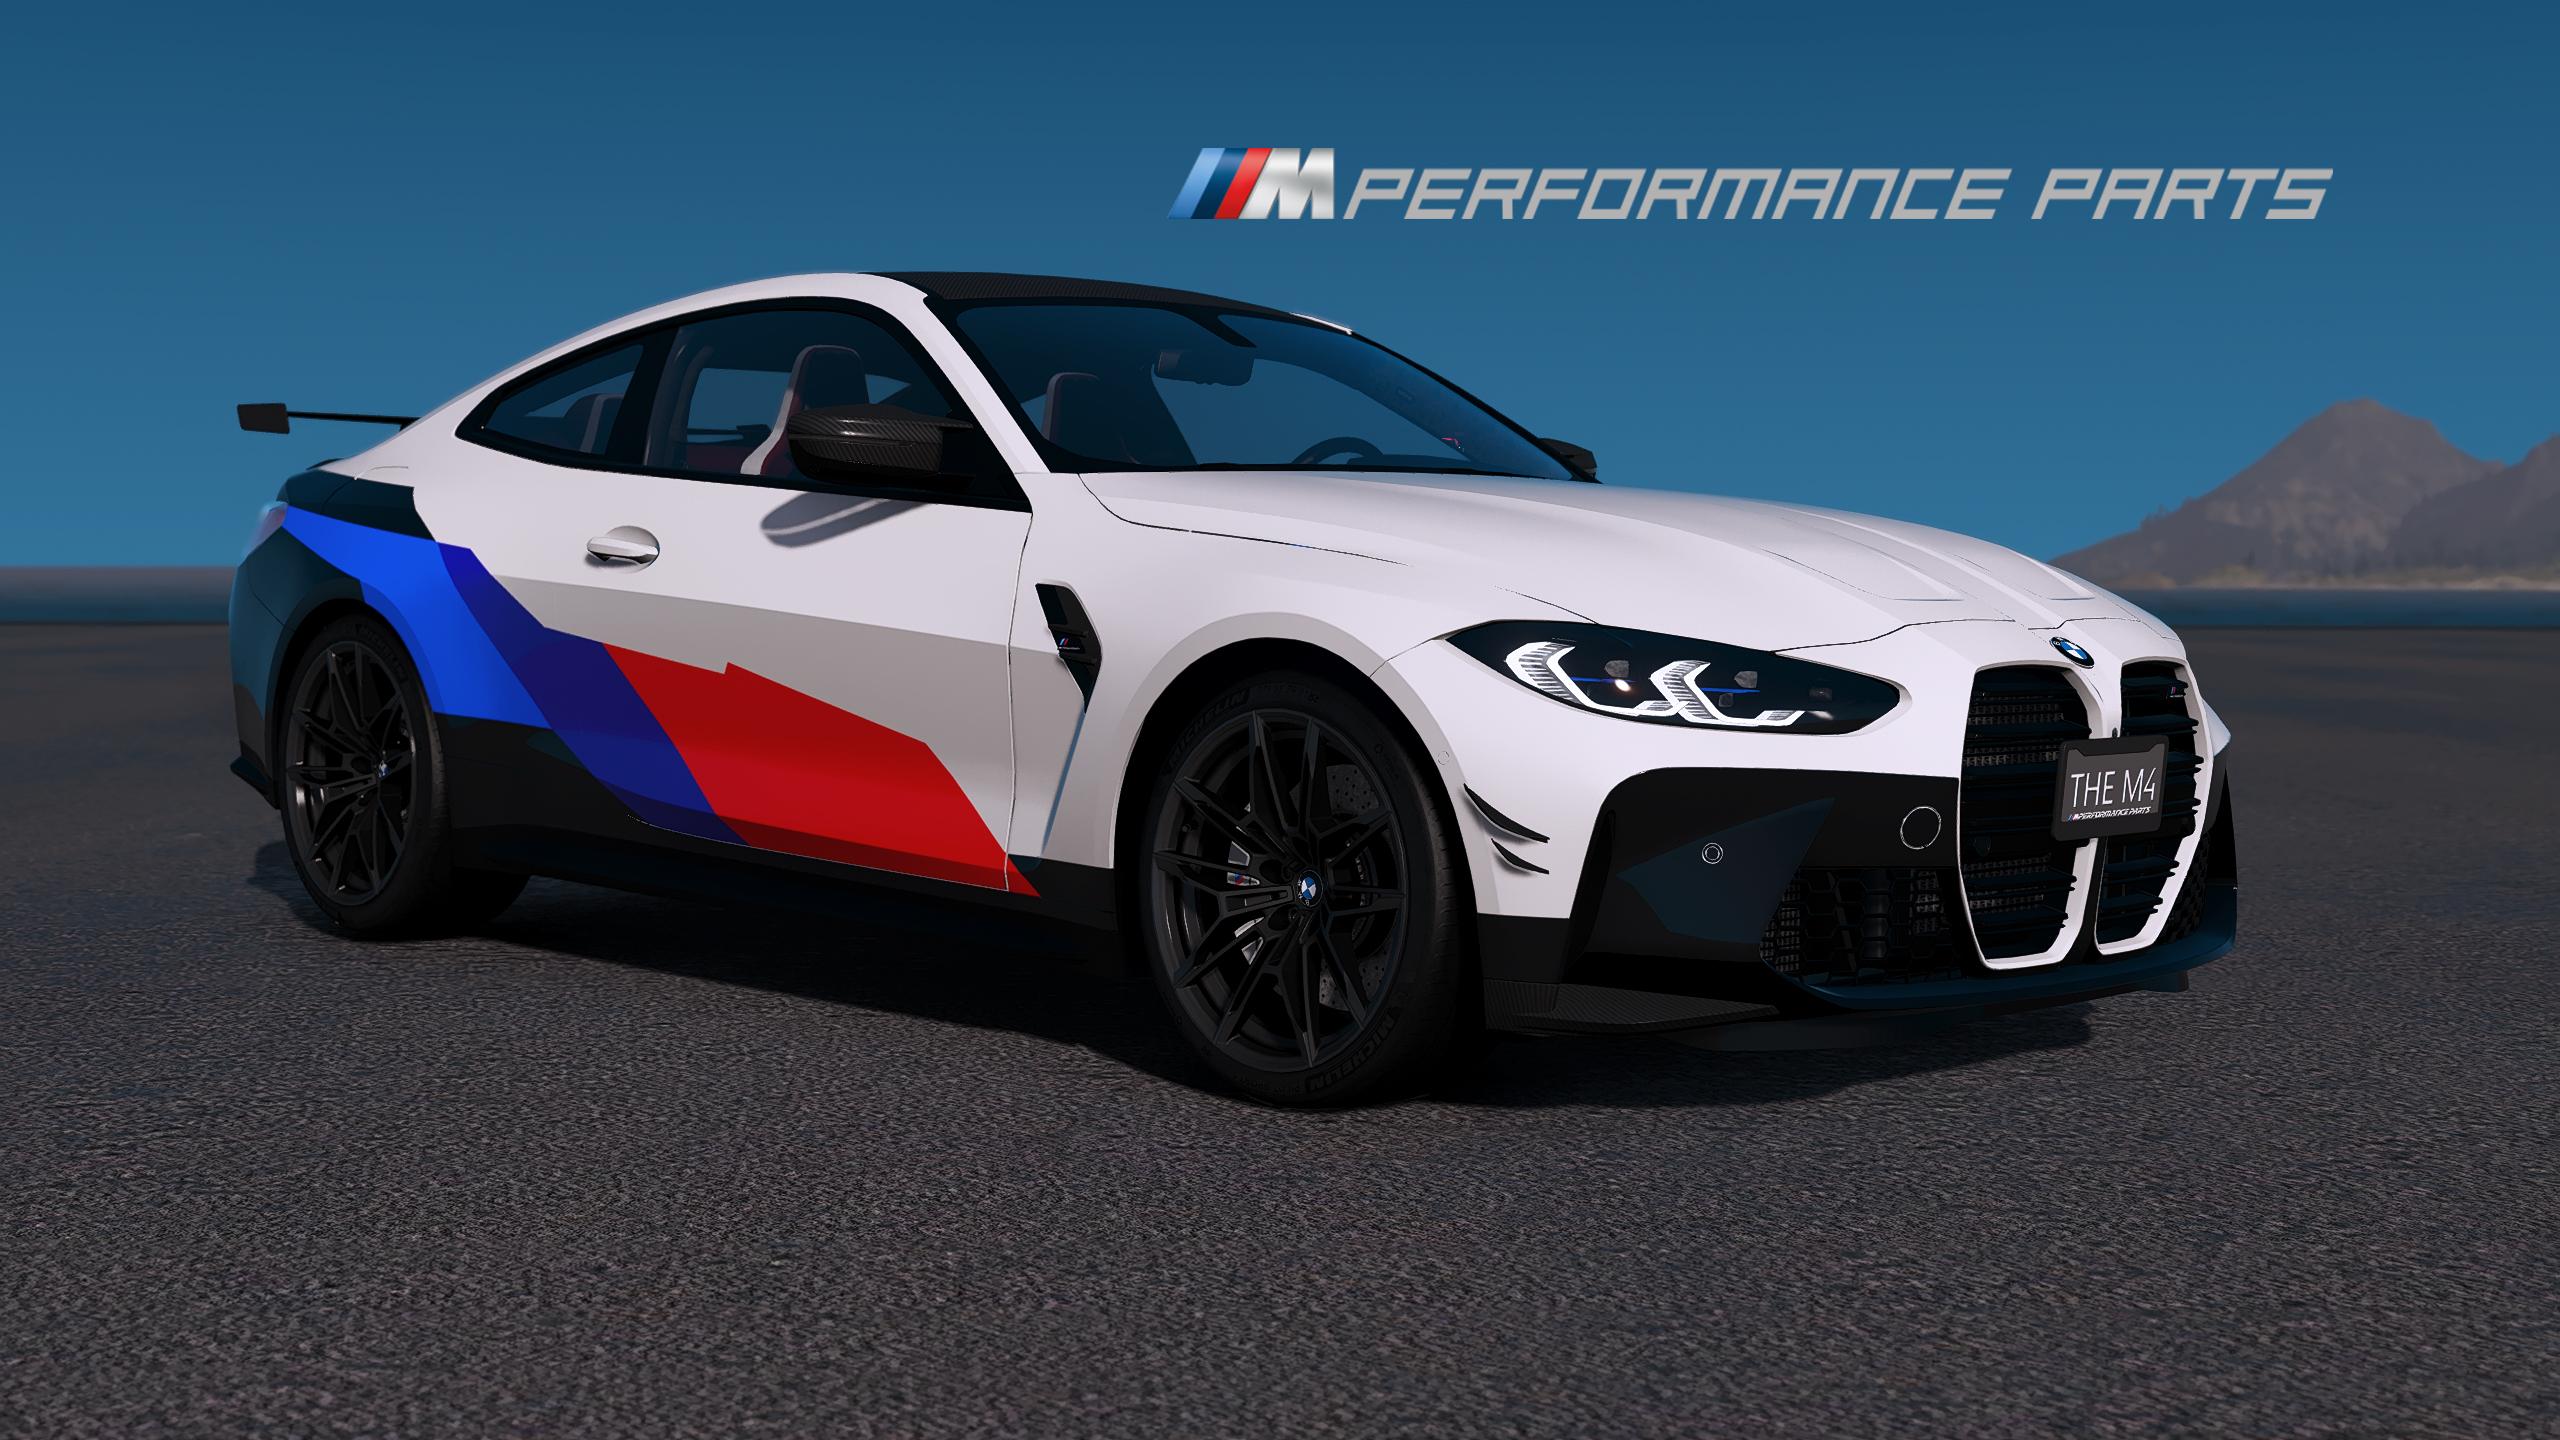 2021 BMW M4]M Performance Parts livery 